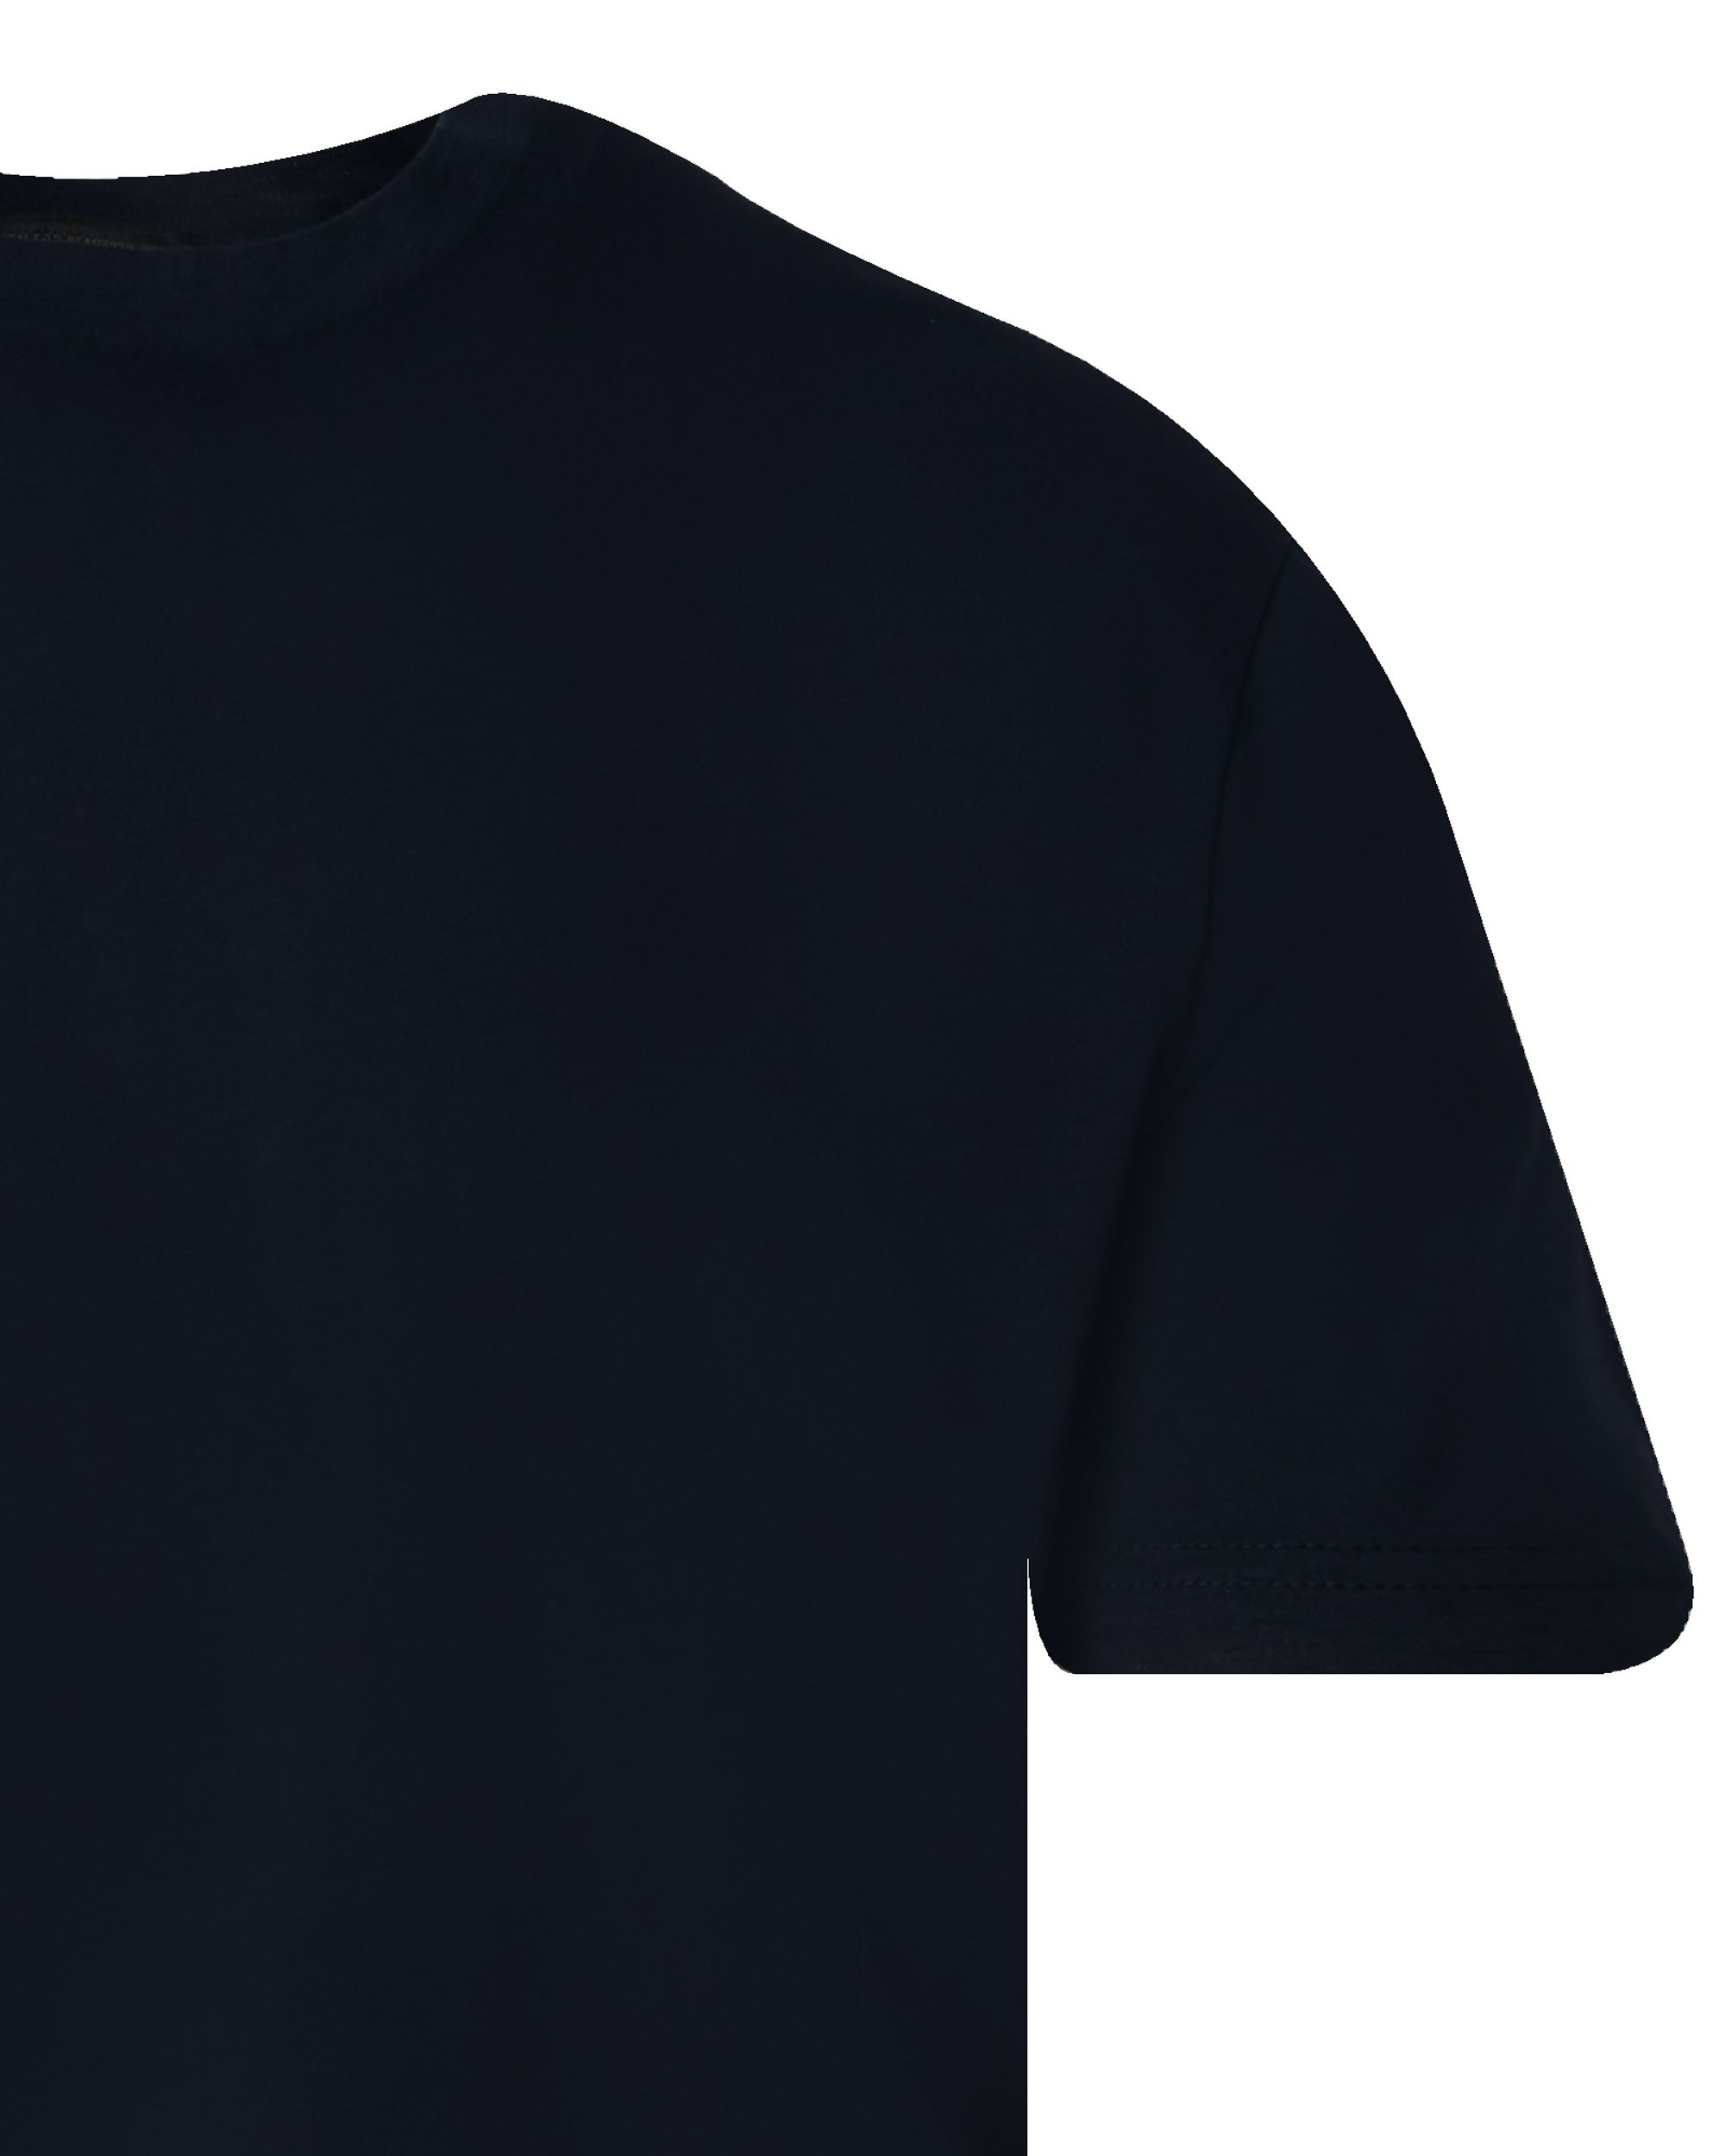 Drykorn Gilberd T-shirt KM Donker blauw 093327-001-L